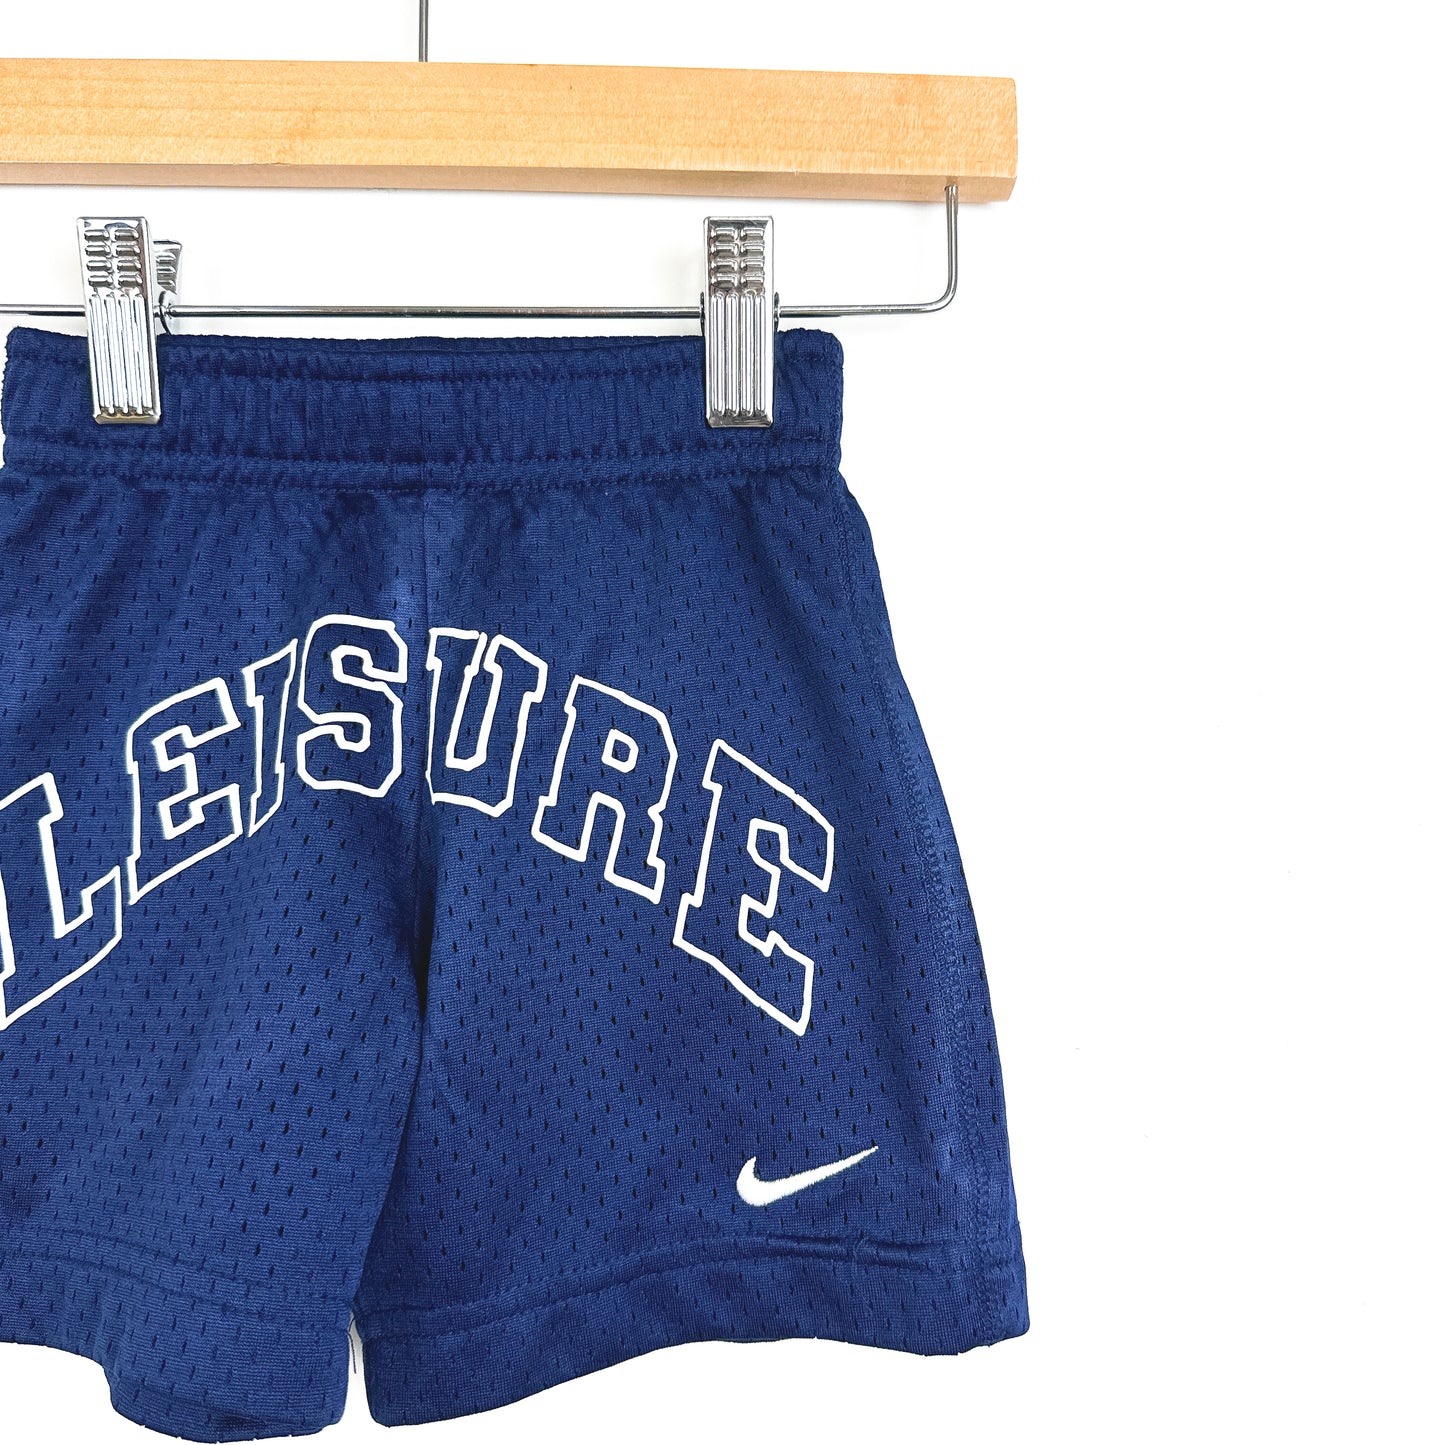 LEISURE - Navy Jr. Varsity Mesh Shorts - Size 2T